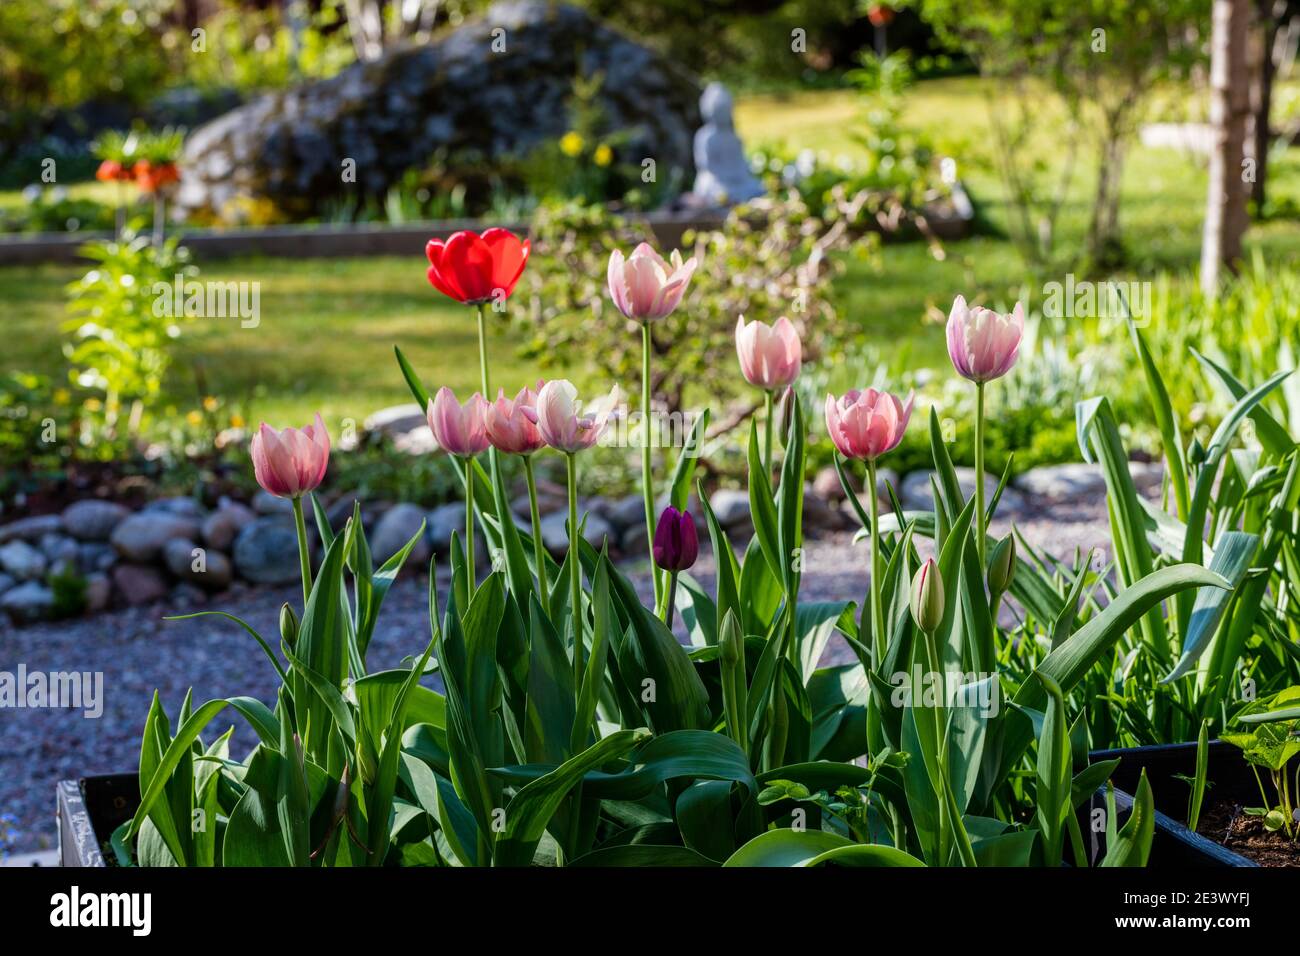 Die almon Eindruck" Darwin Hybrid Tulip, Darwinhybridtulpan (Tulipa gesneriana) Stockfoto